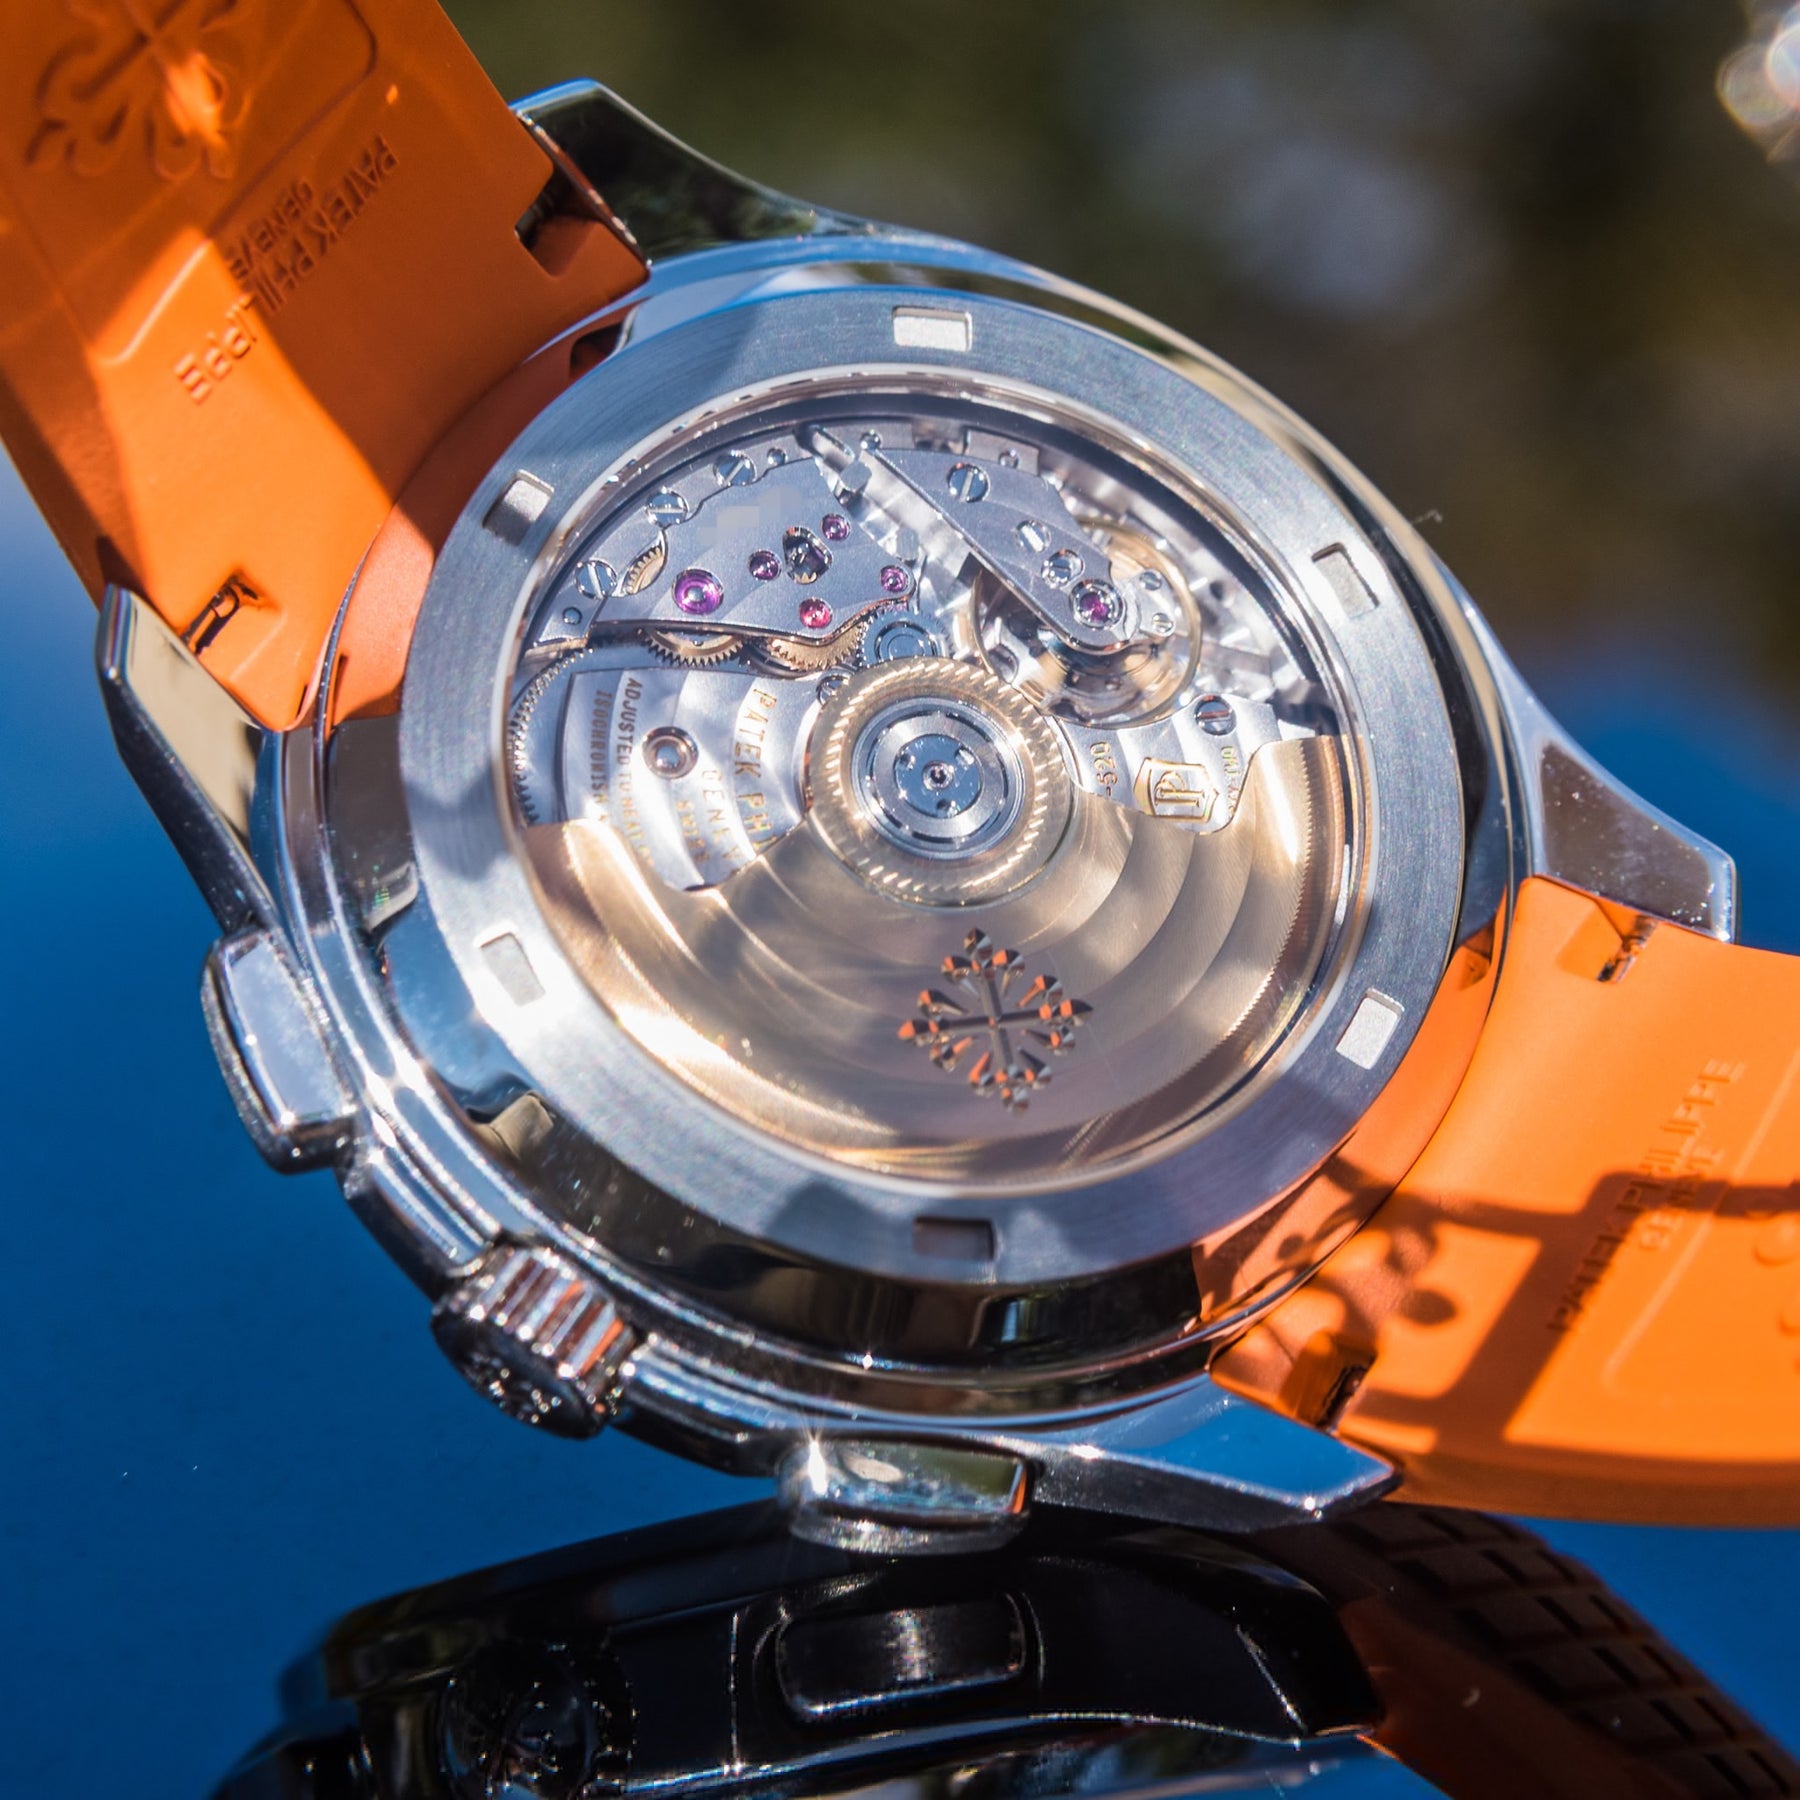 Patek Philippe 5968A-001 Aquanaut Chronograph Steel & Orange Rubber -  Luxury Watches USA